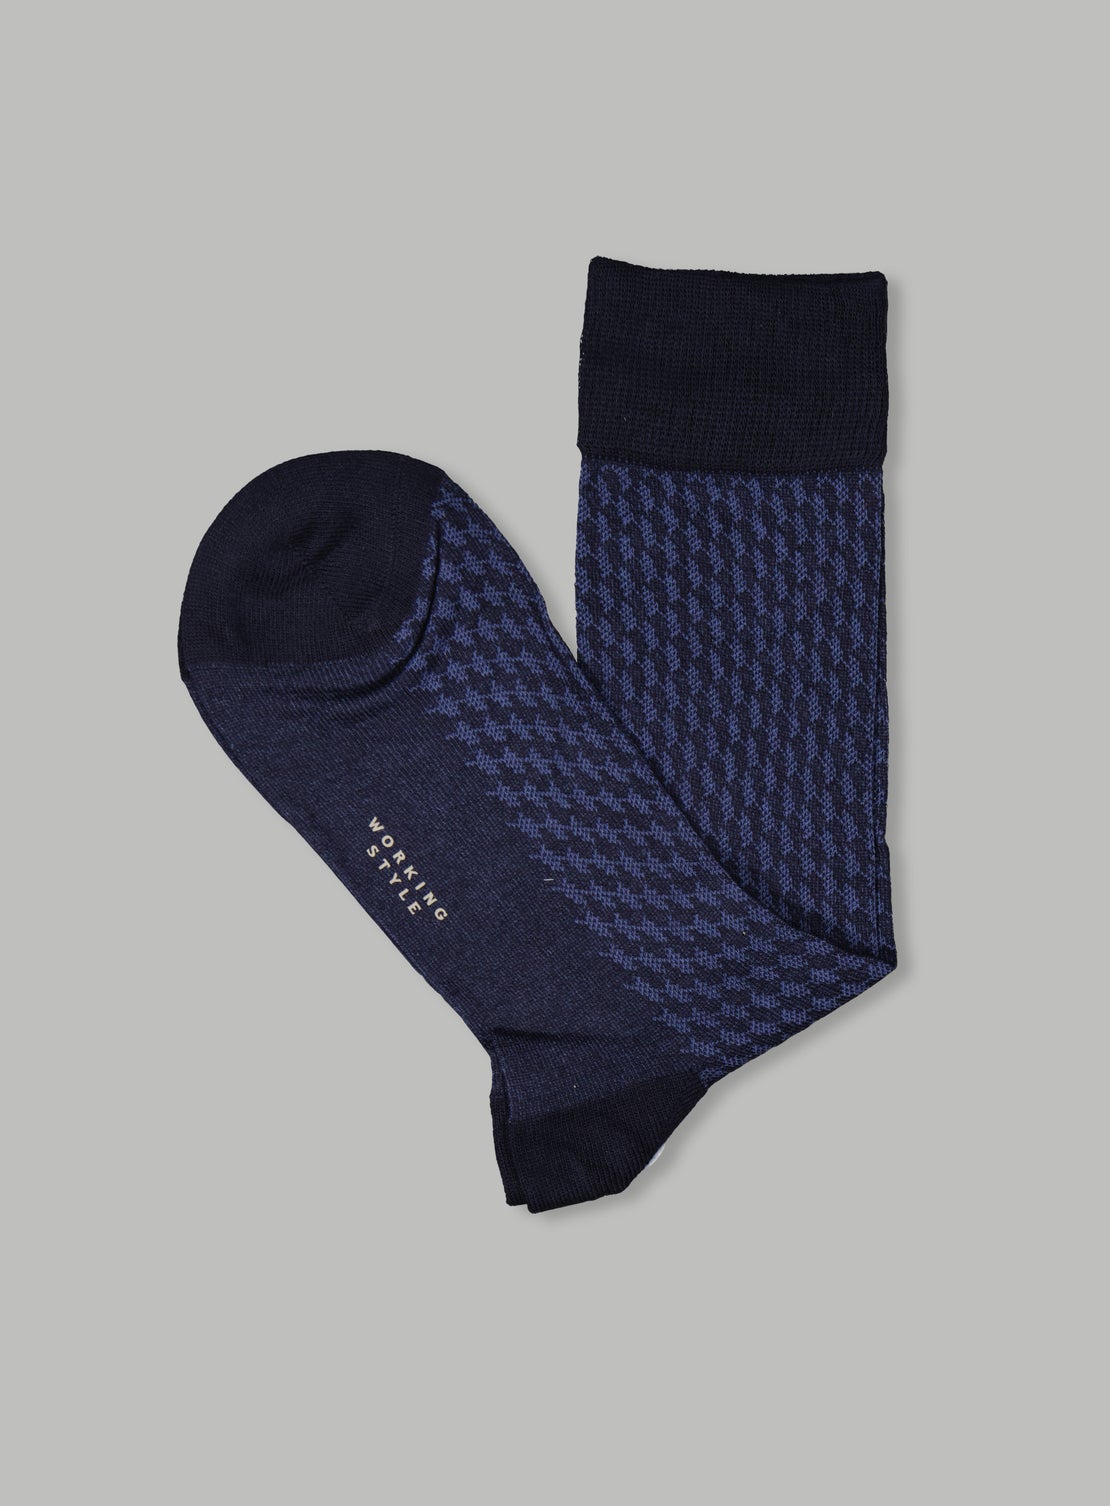 Navy/Blue Bamboo Socks